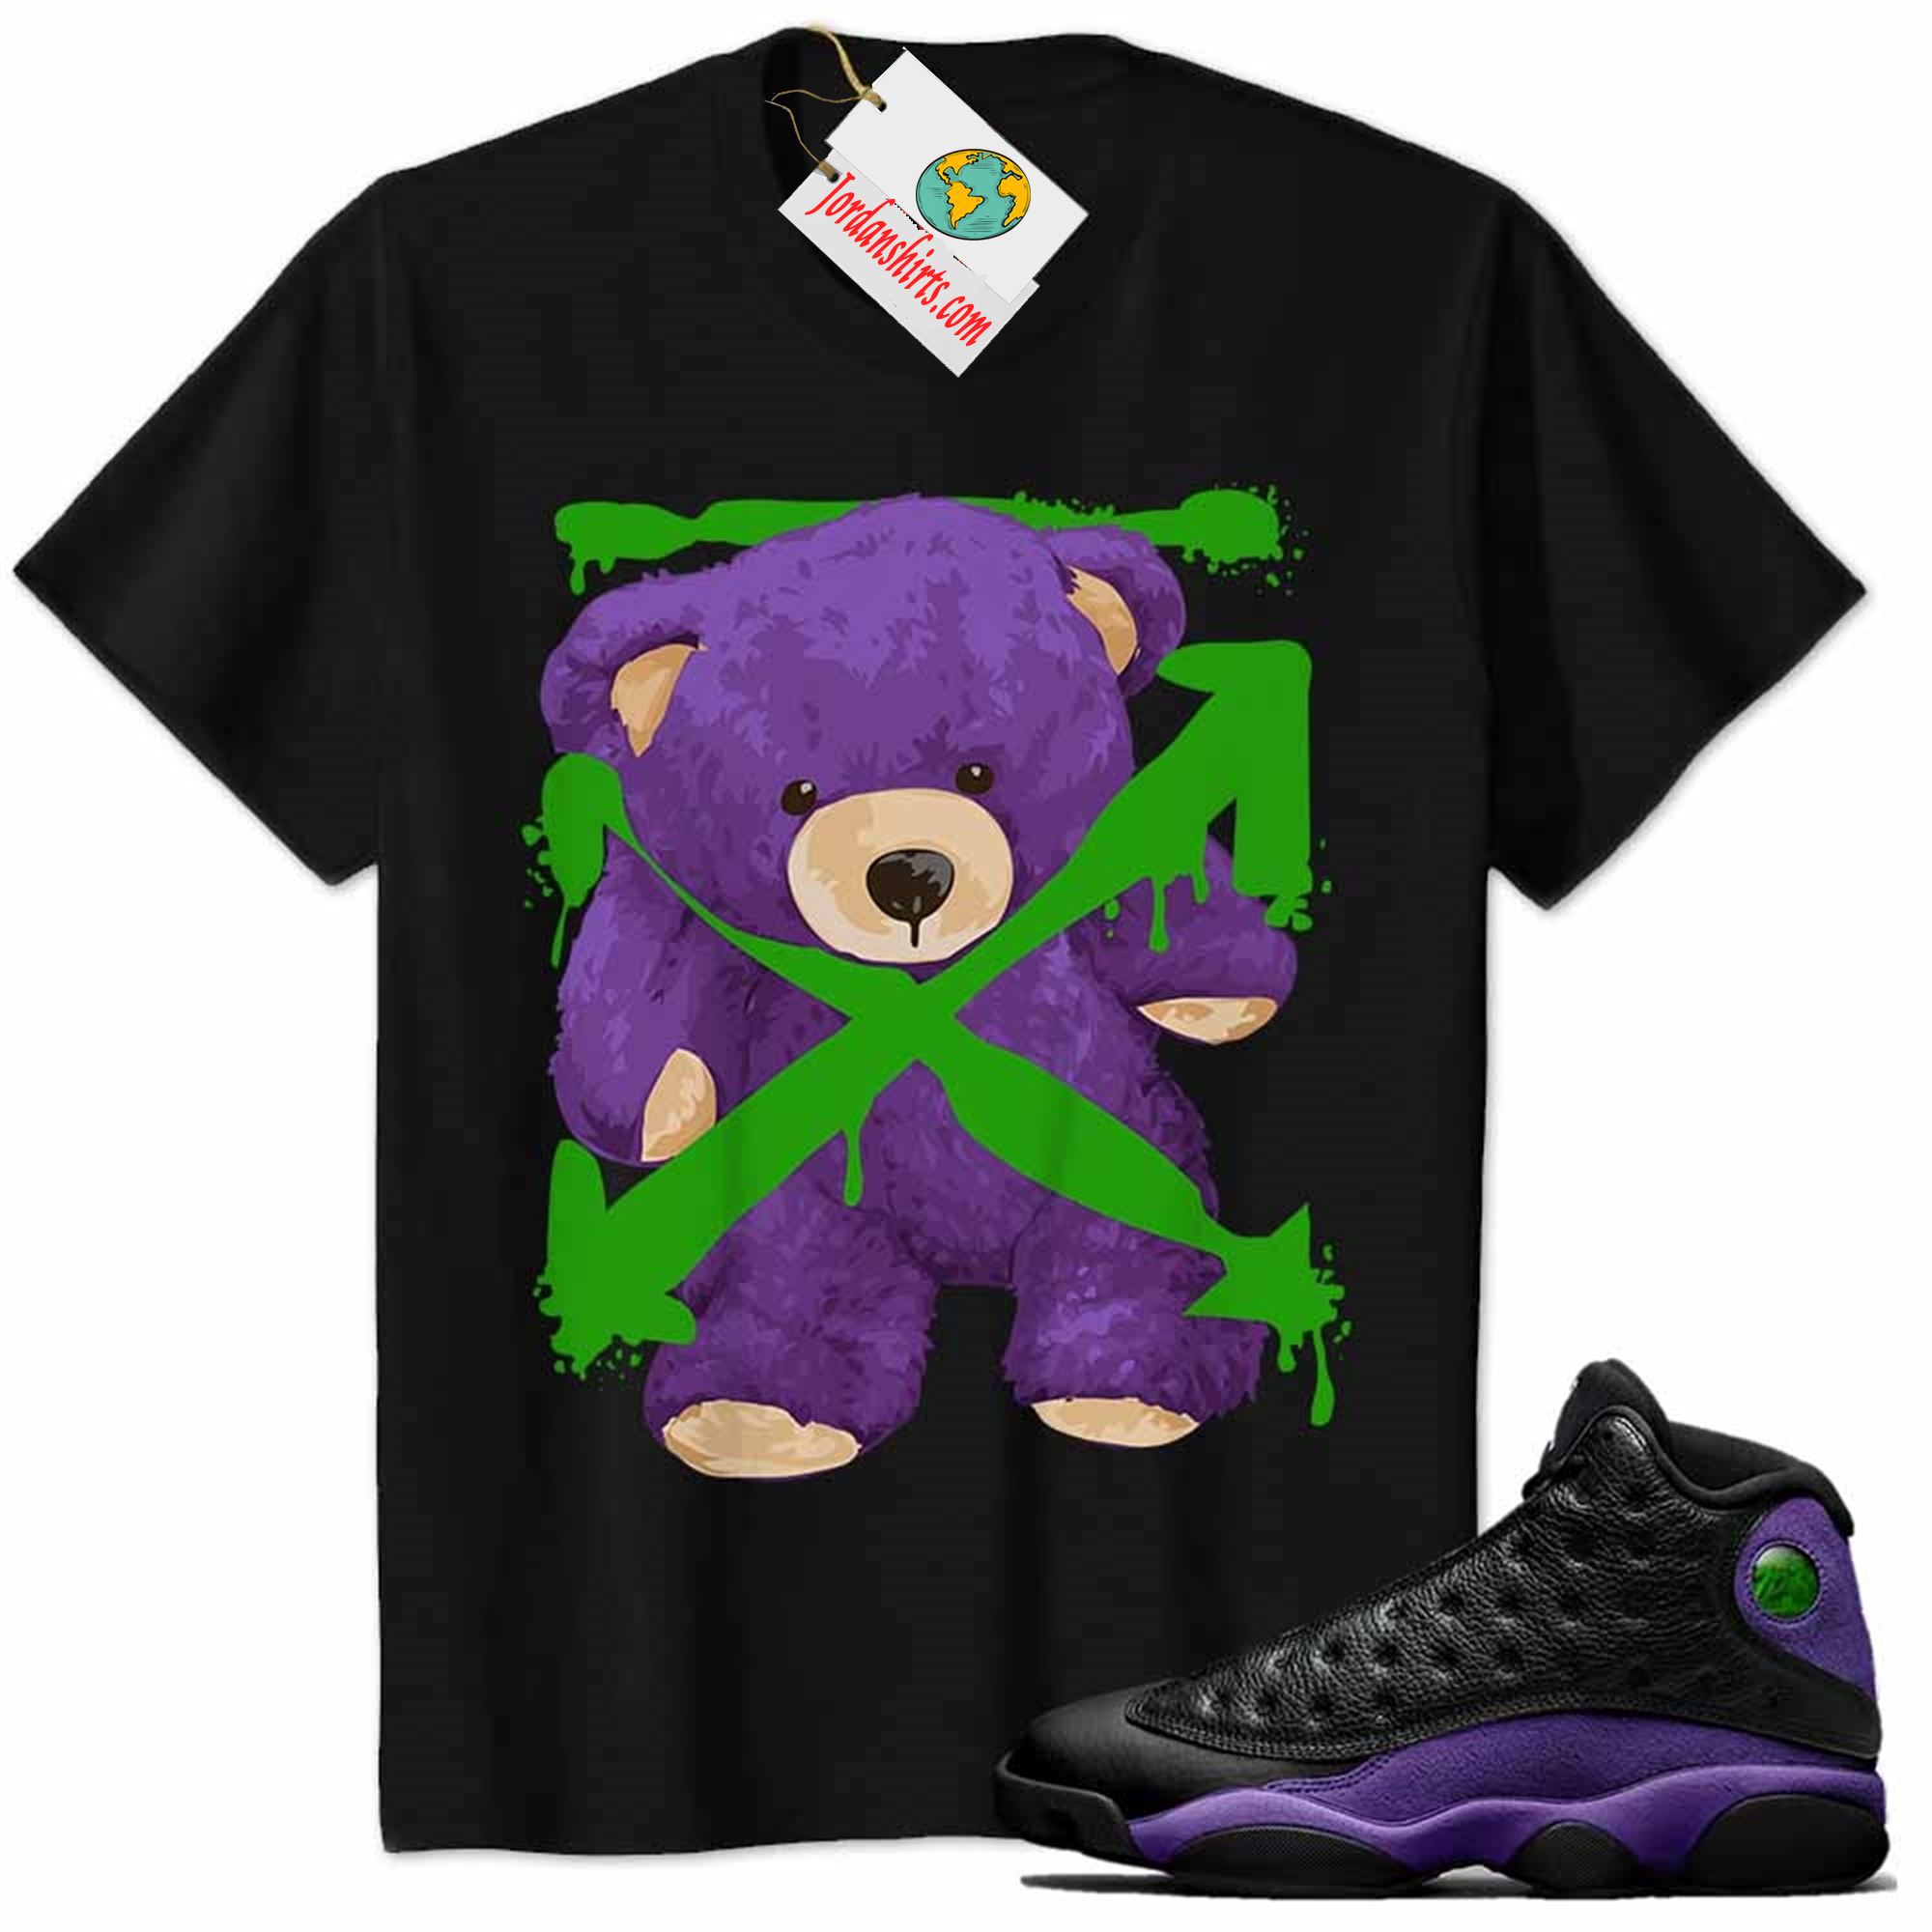 Jordan 13 Shirt, Teddy Bear Off White Paint Dripping Black Air Jordan 13 Court Purple 13s Size Up To 5xl